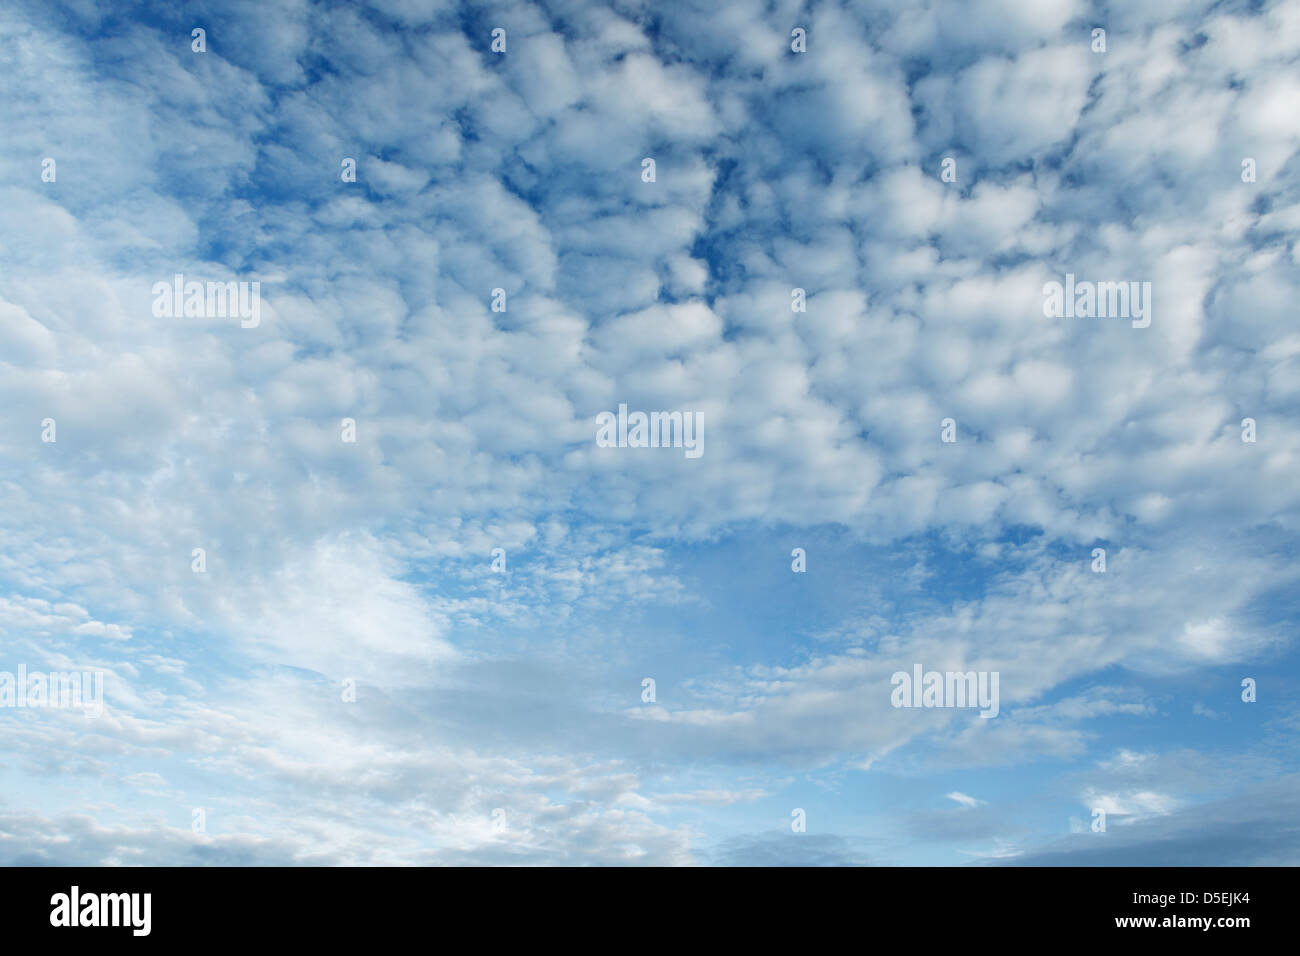 Altocumulus cloud patterns of white cloud forms against a blue sky Stock Photo